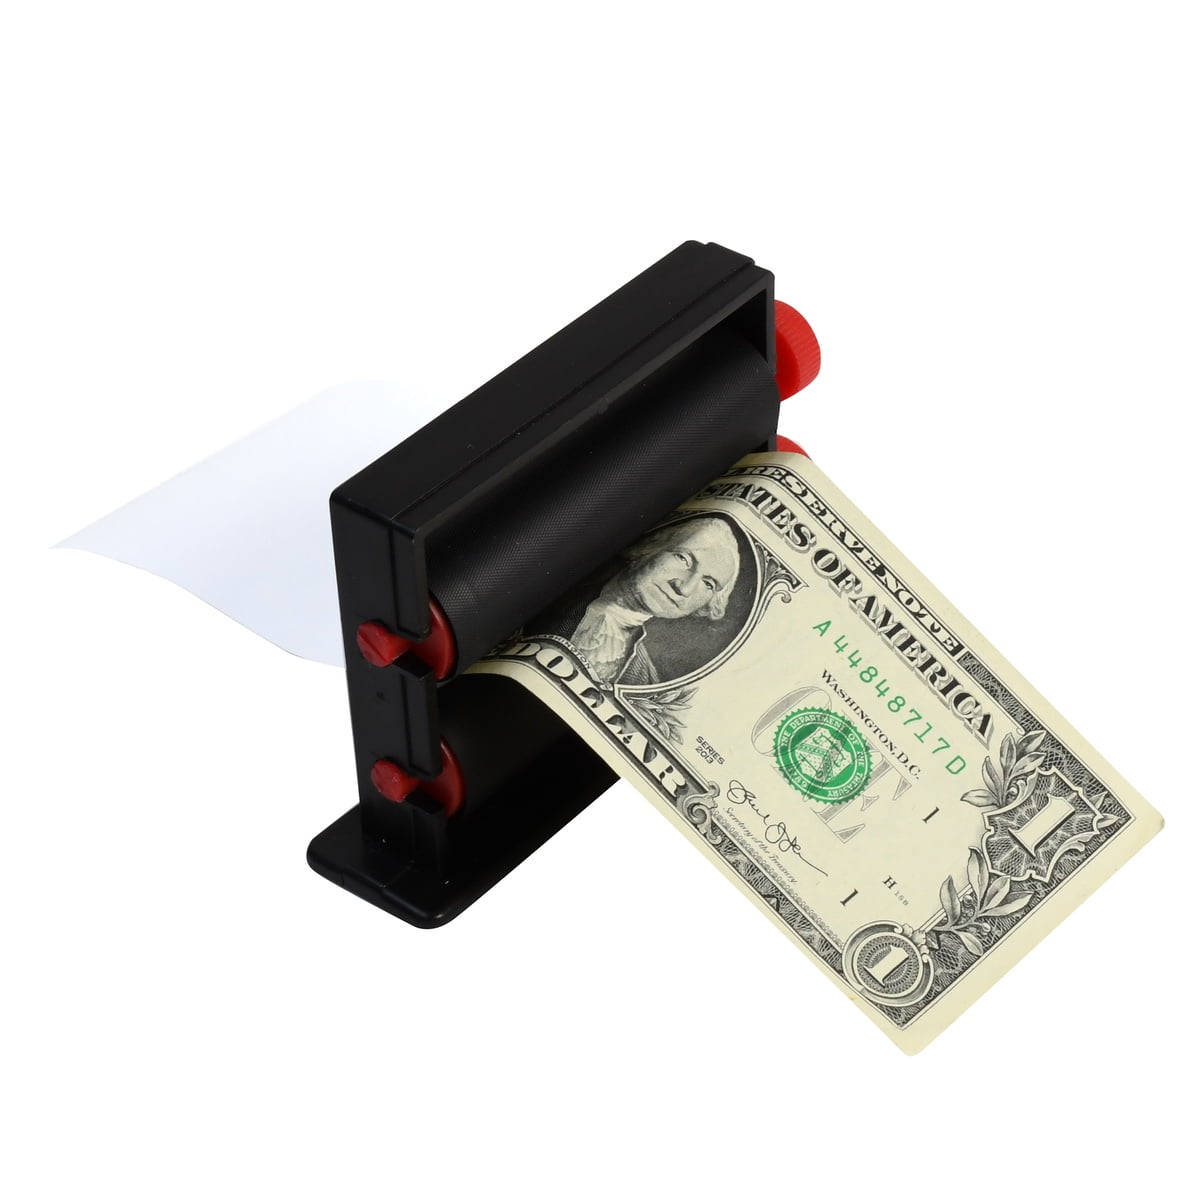 Details about   Magic Trick Money Printing Machine Money Maker for Kids Cognitive Toy Black 